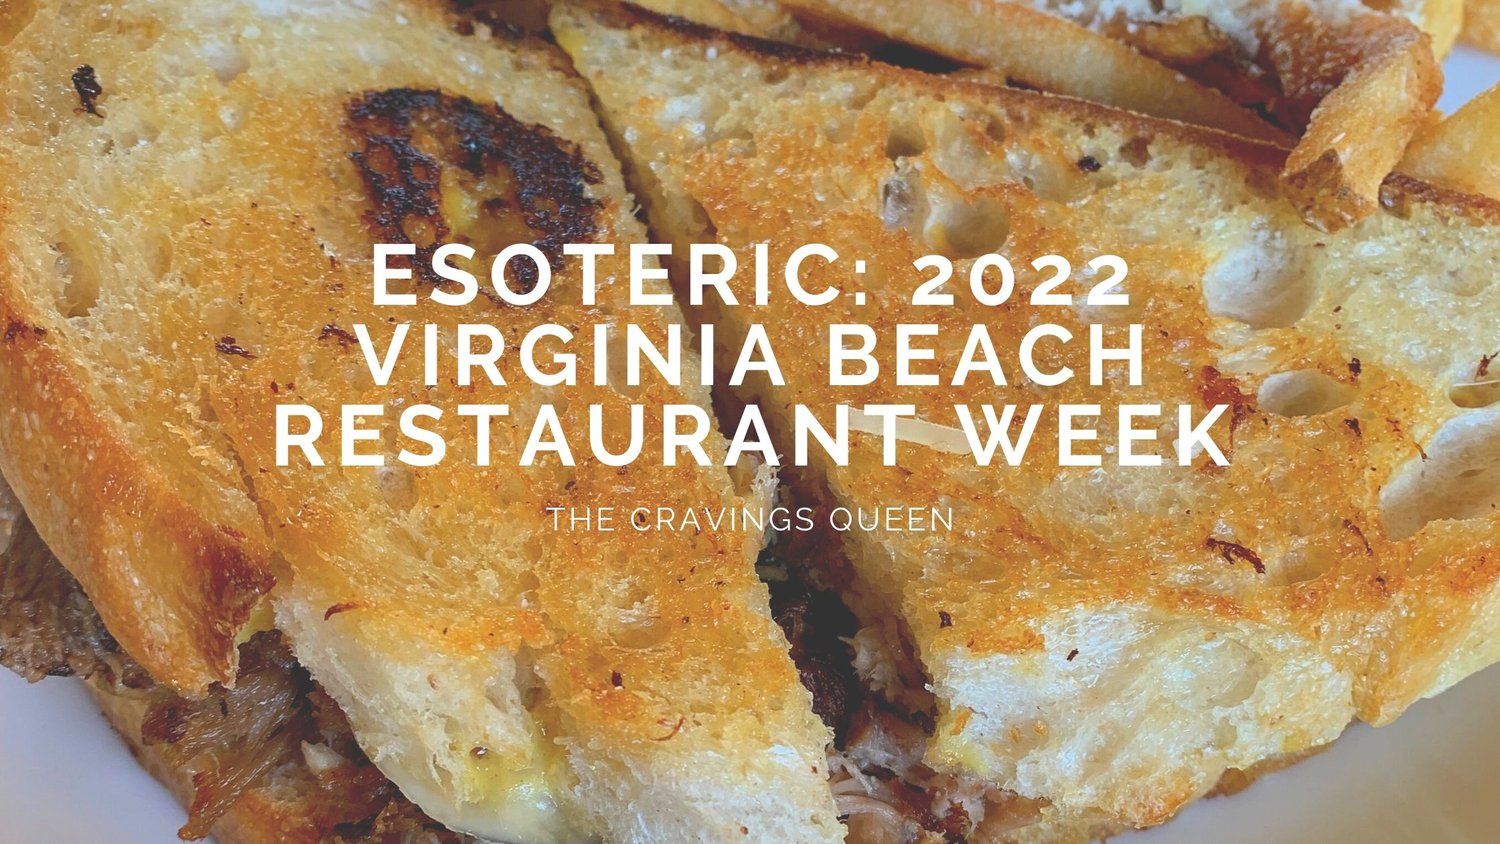 Esoteric: 2022 Virginia Beach Restaurant Week — The Cravings Queen